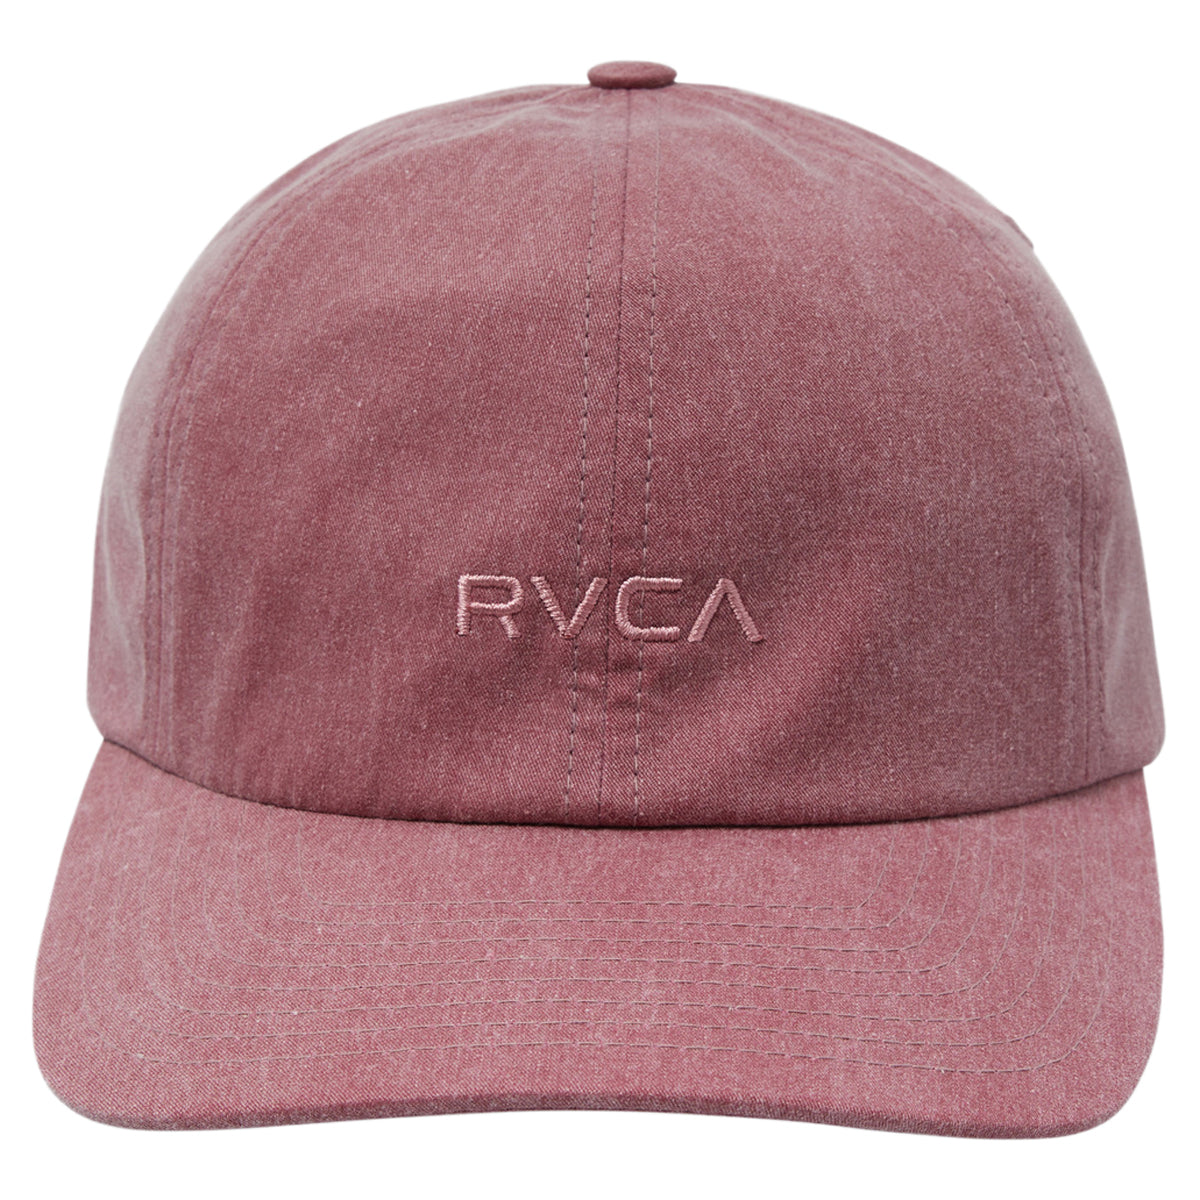 RVCA Ptc Six Panel Hat - Oxblood Red image 3